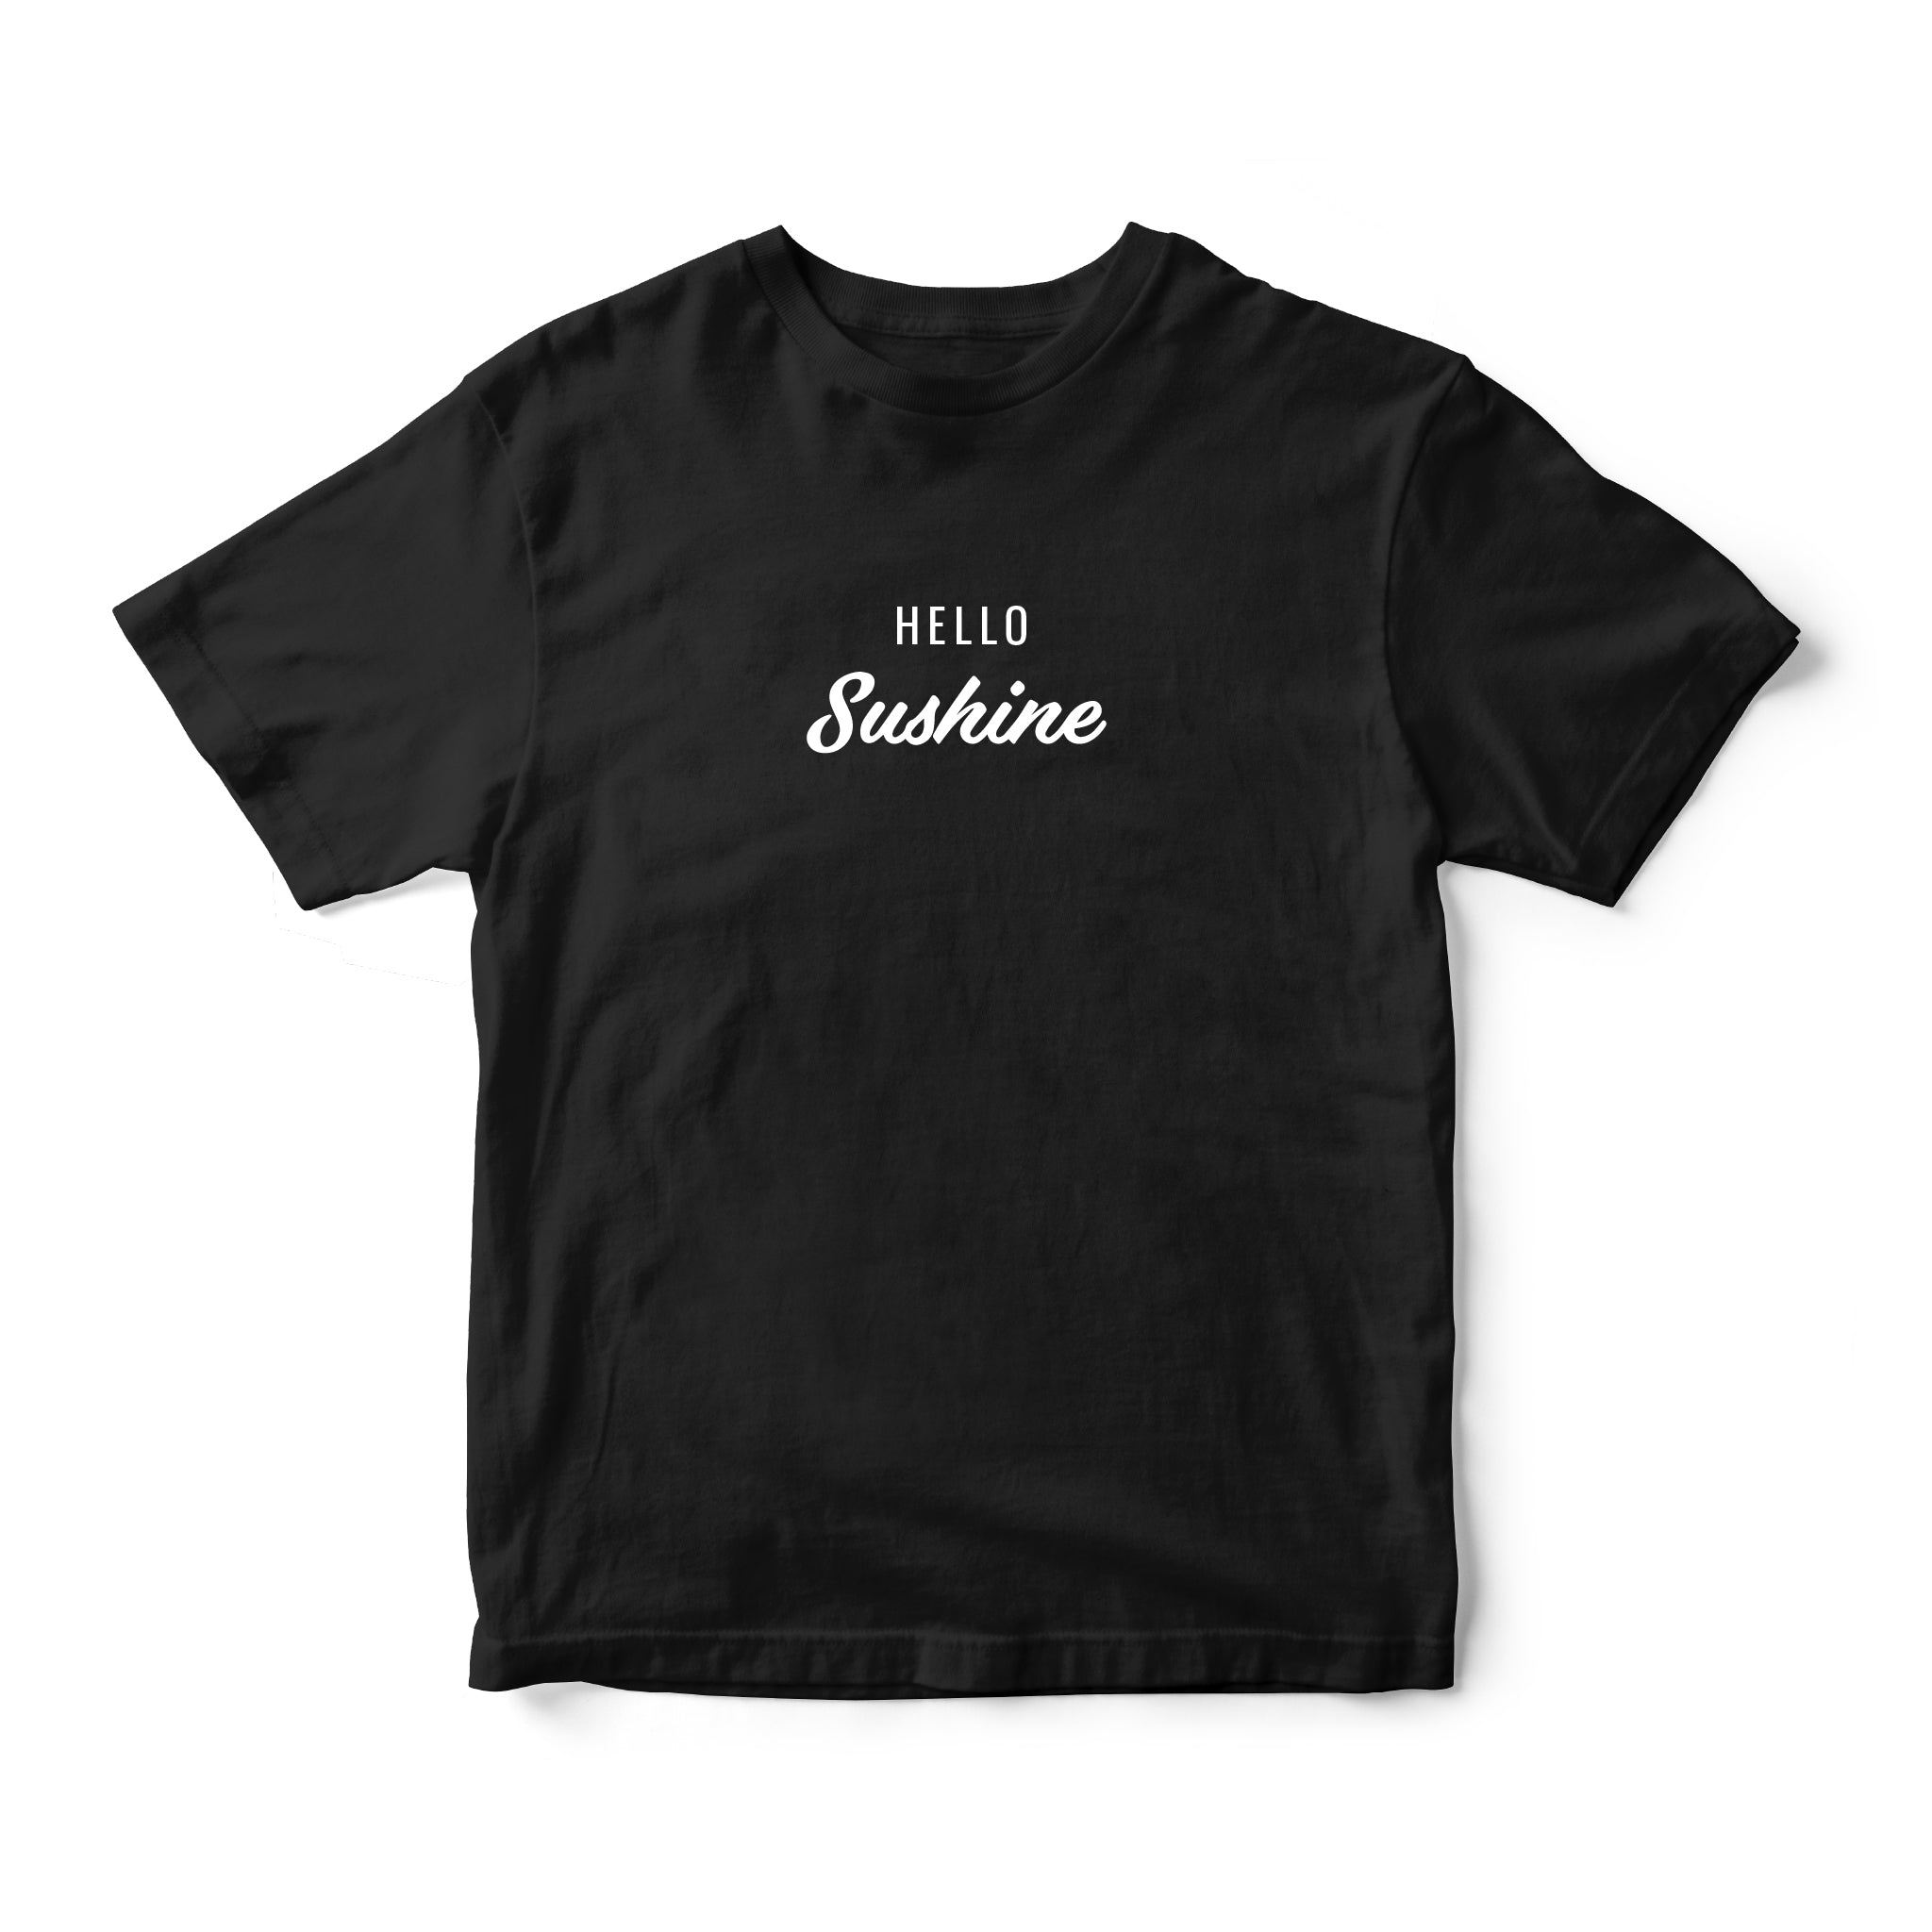 Instee Hello Sunshine T-shirt Unisex 100% Cotton